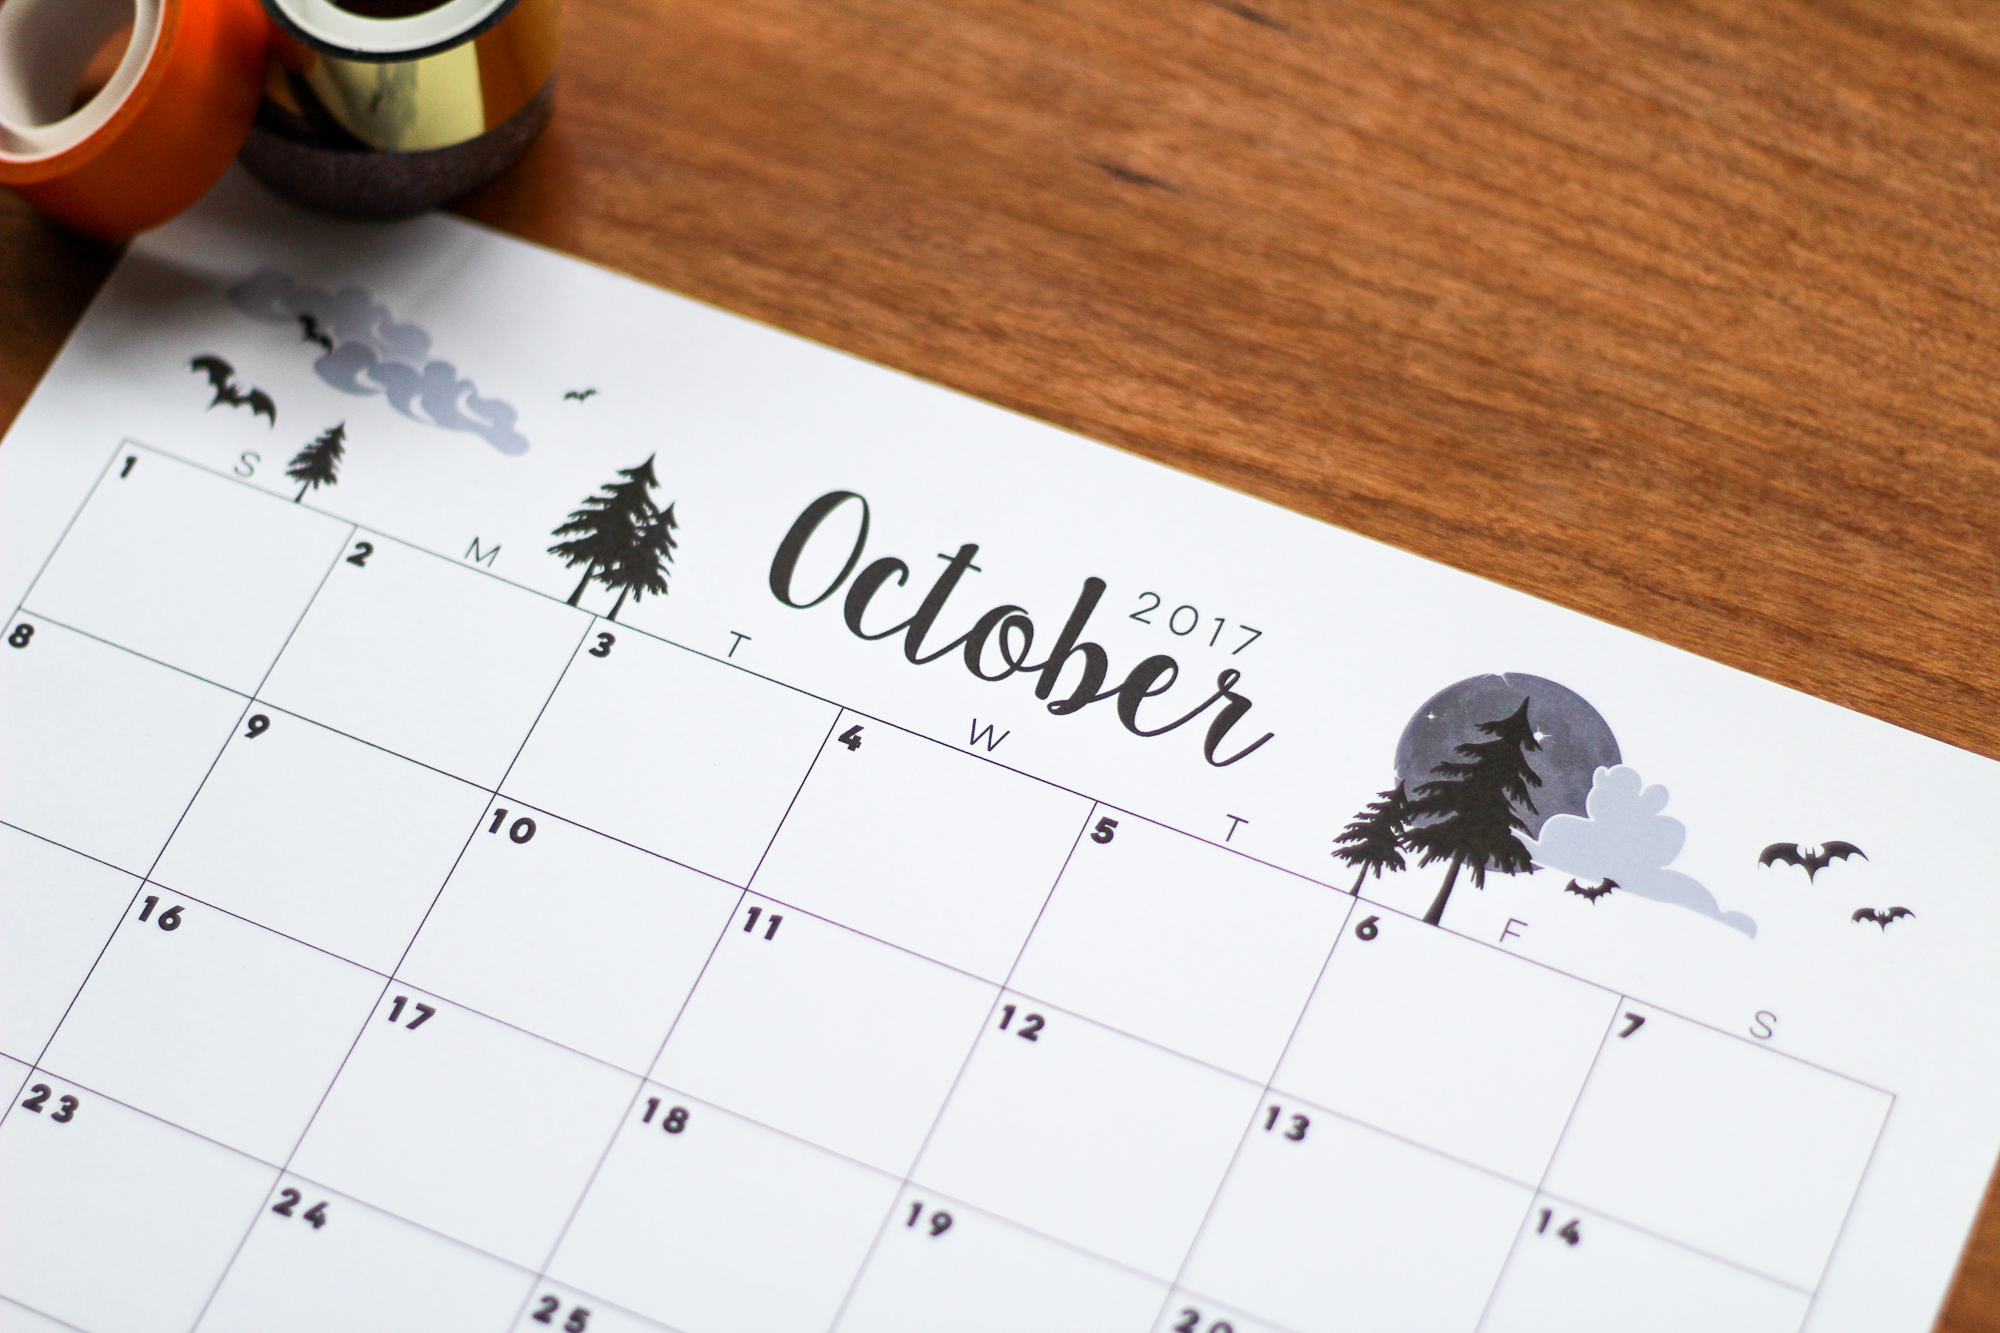 free printable october 2017 calendar